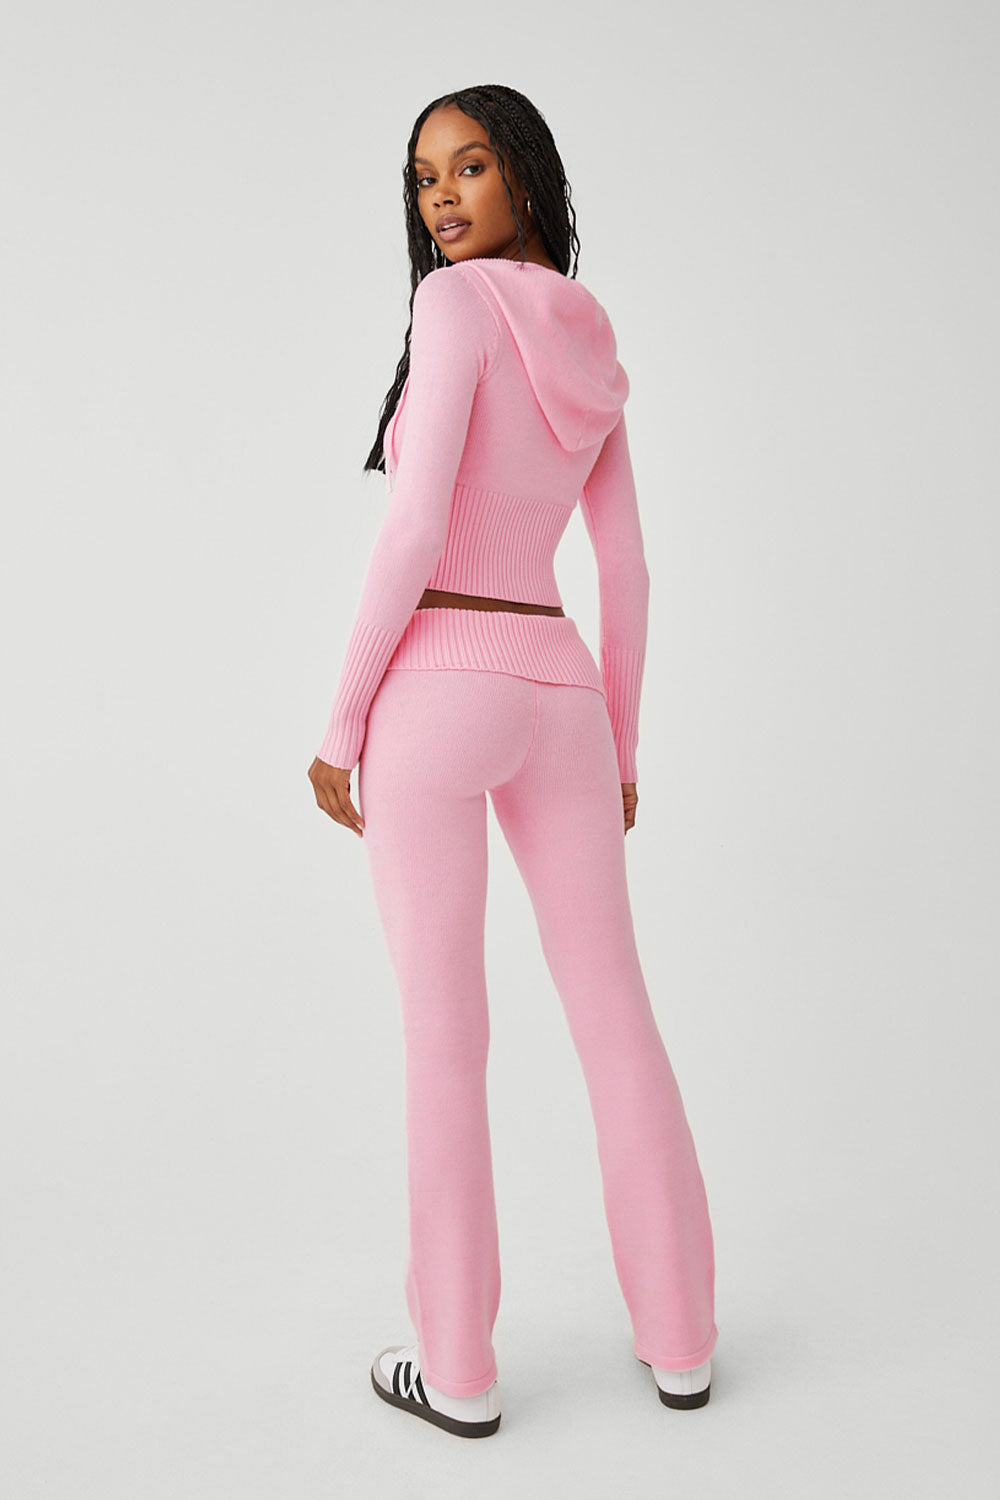 Women's Pink Knit Lounge Pants | Ally Fashion